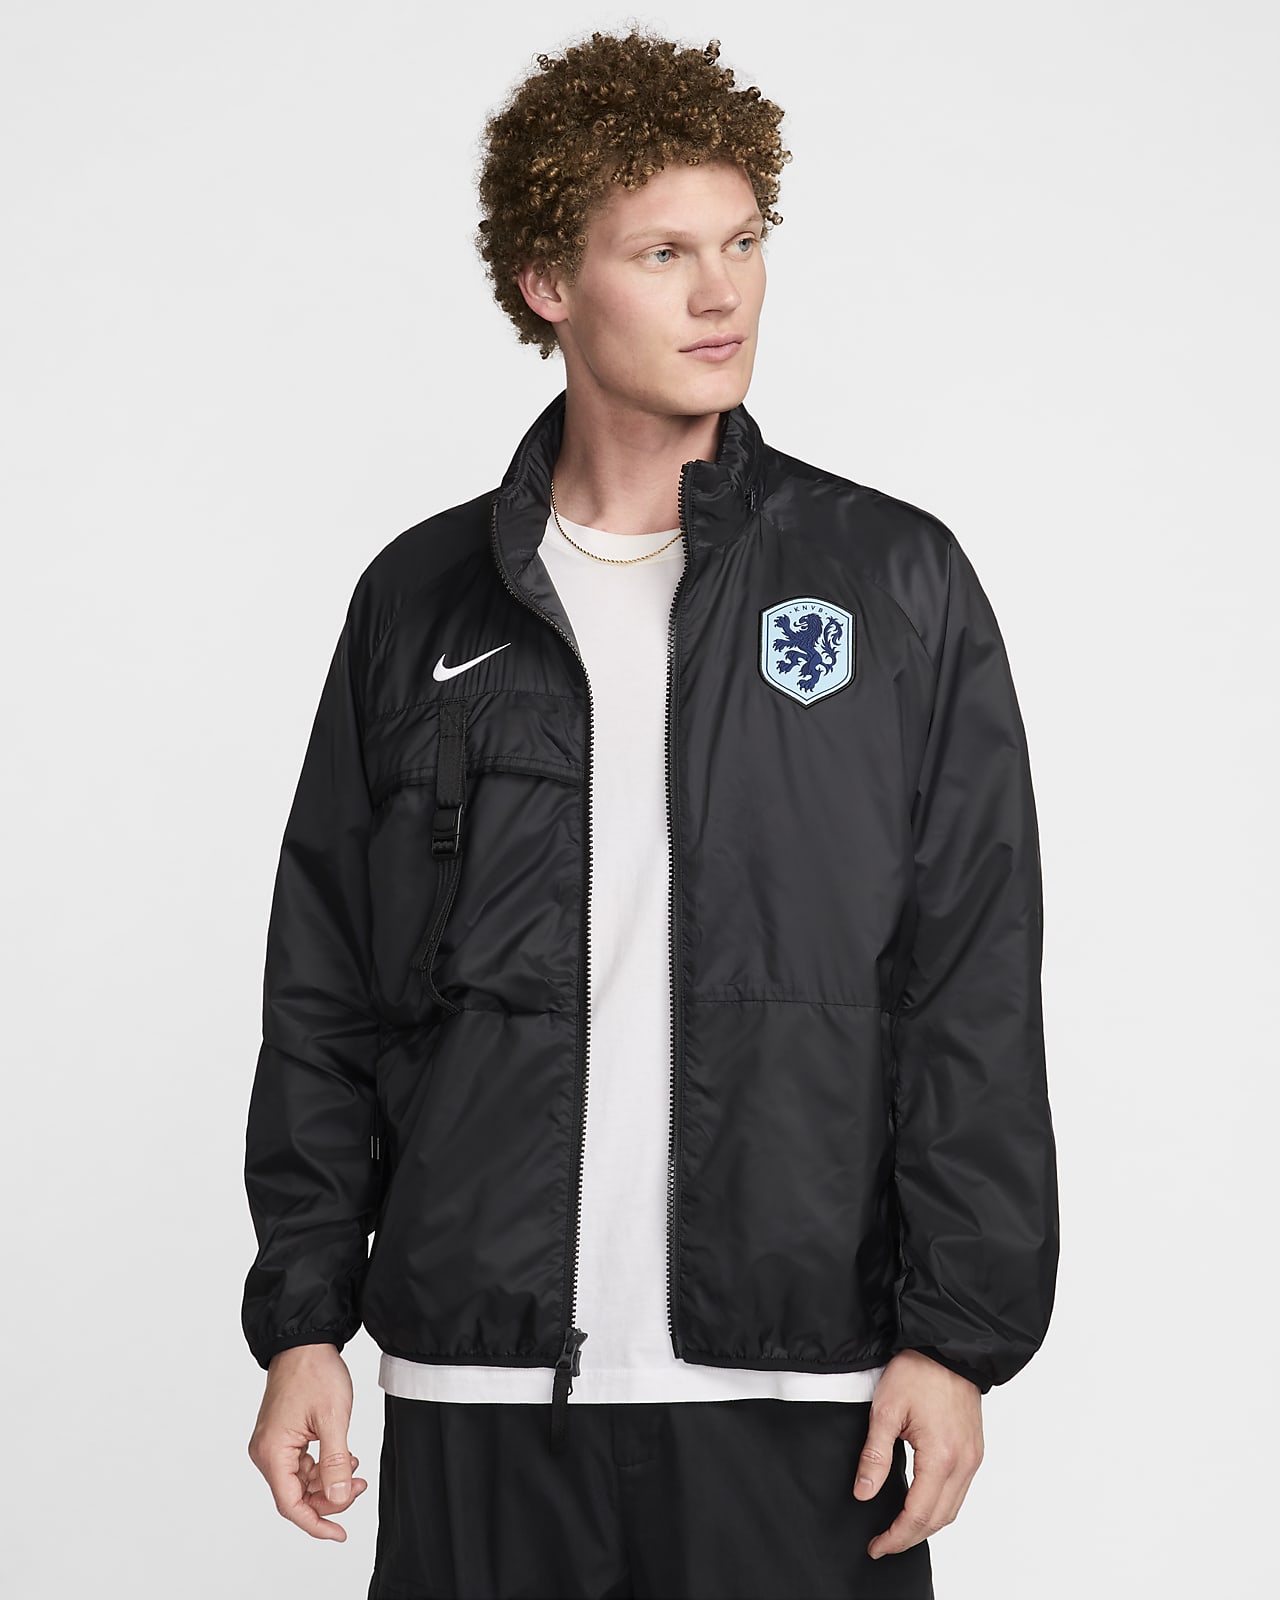 Netherlands Men's Nike Football Jacket